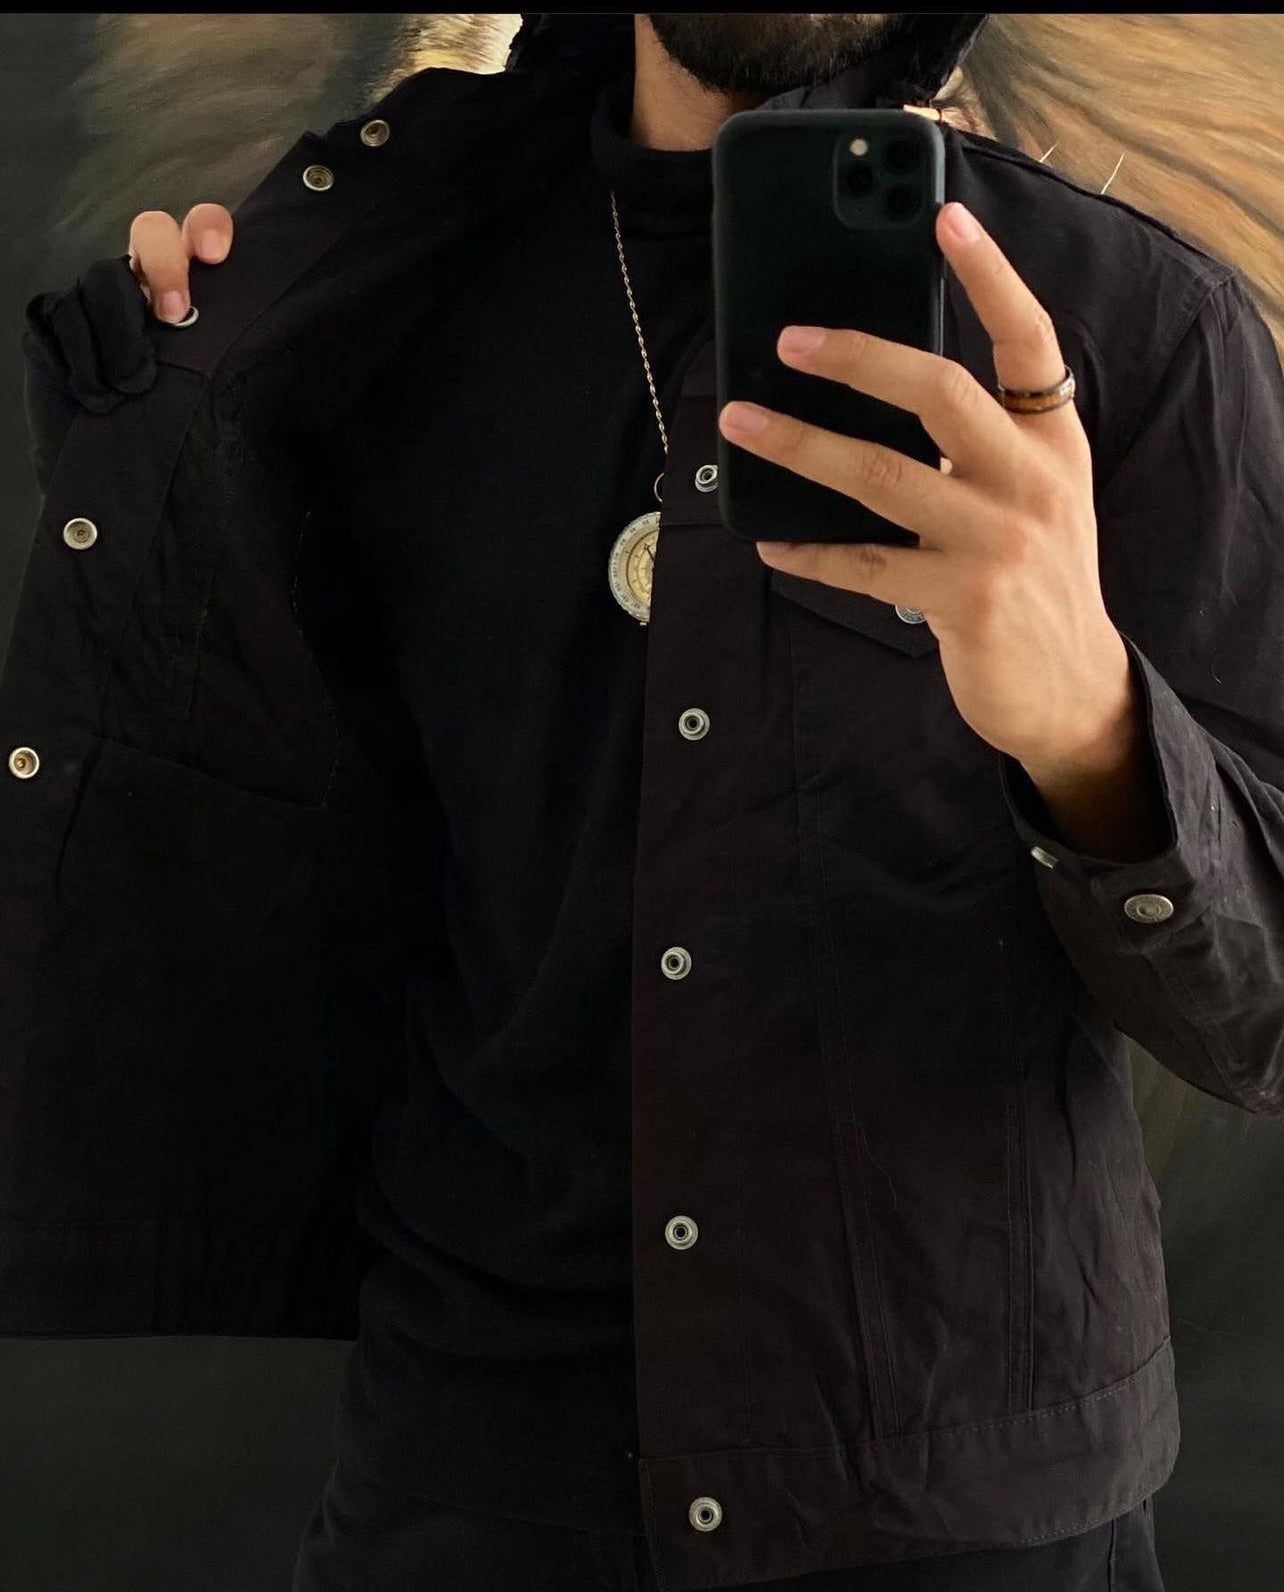 Jacket Levi’s talla M